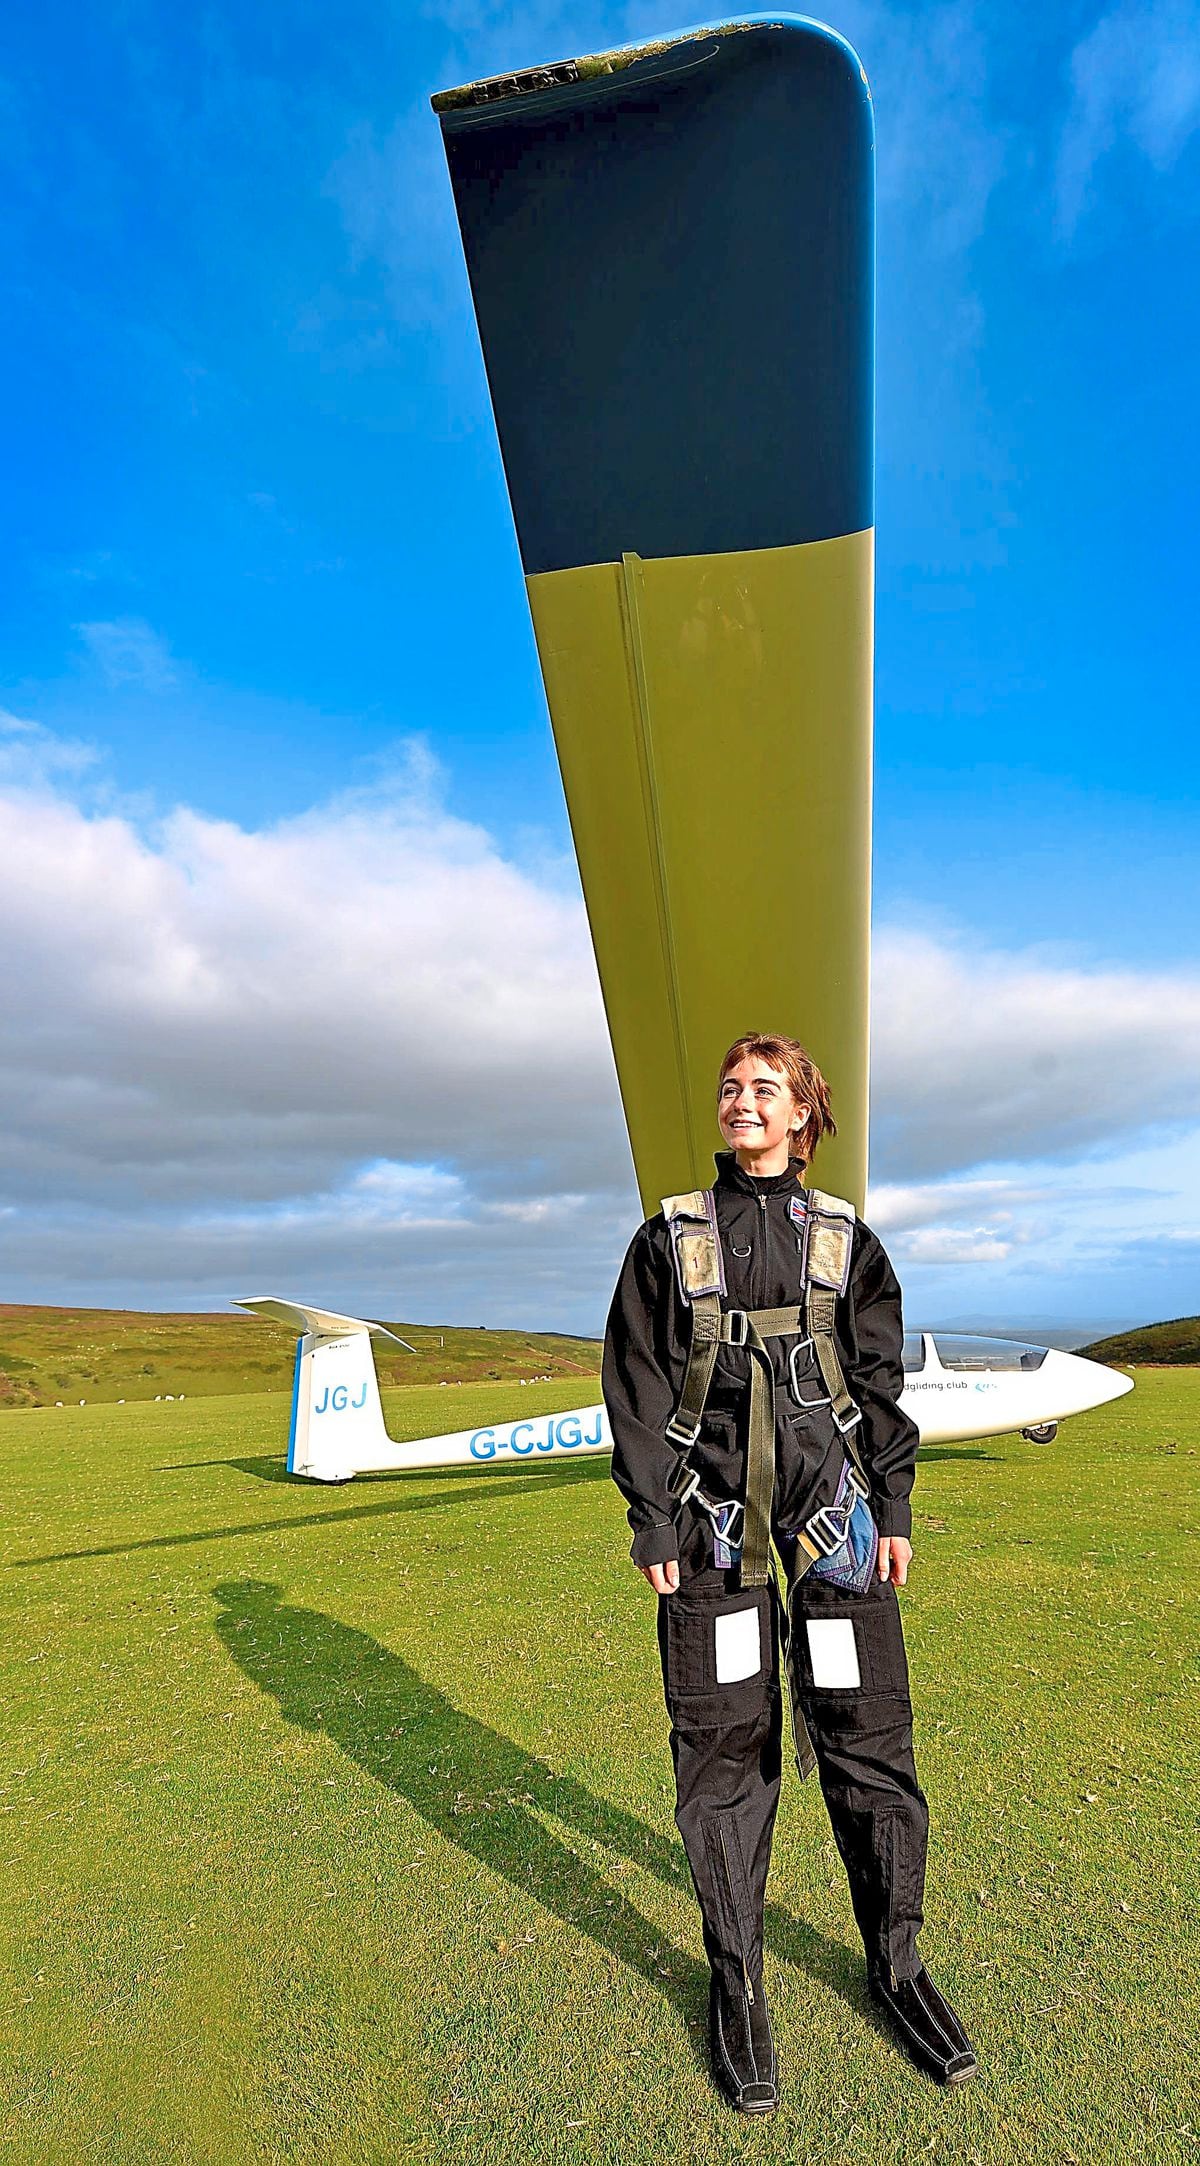 Teenage glider pilot Holly Harris 